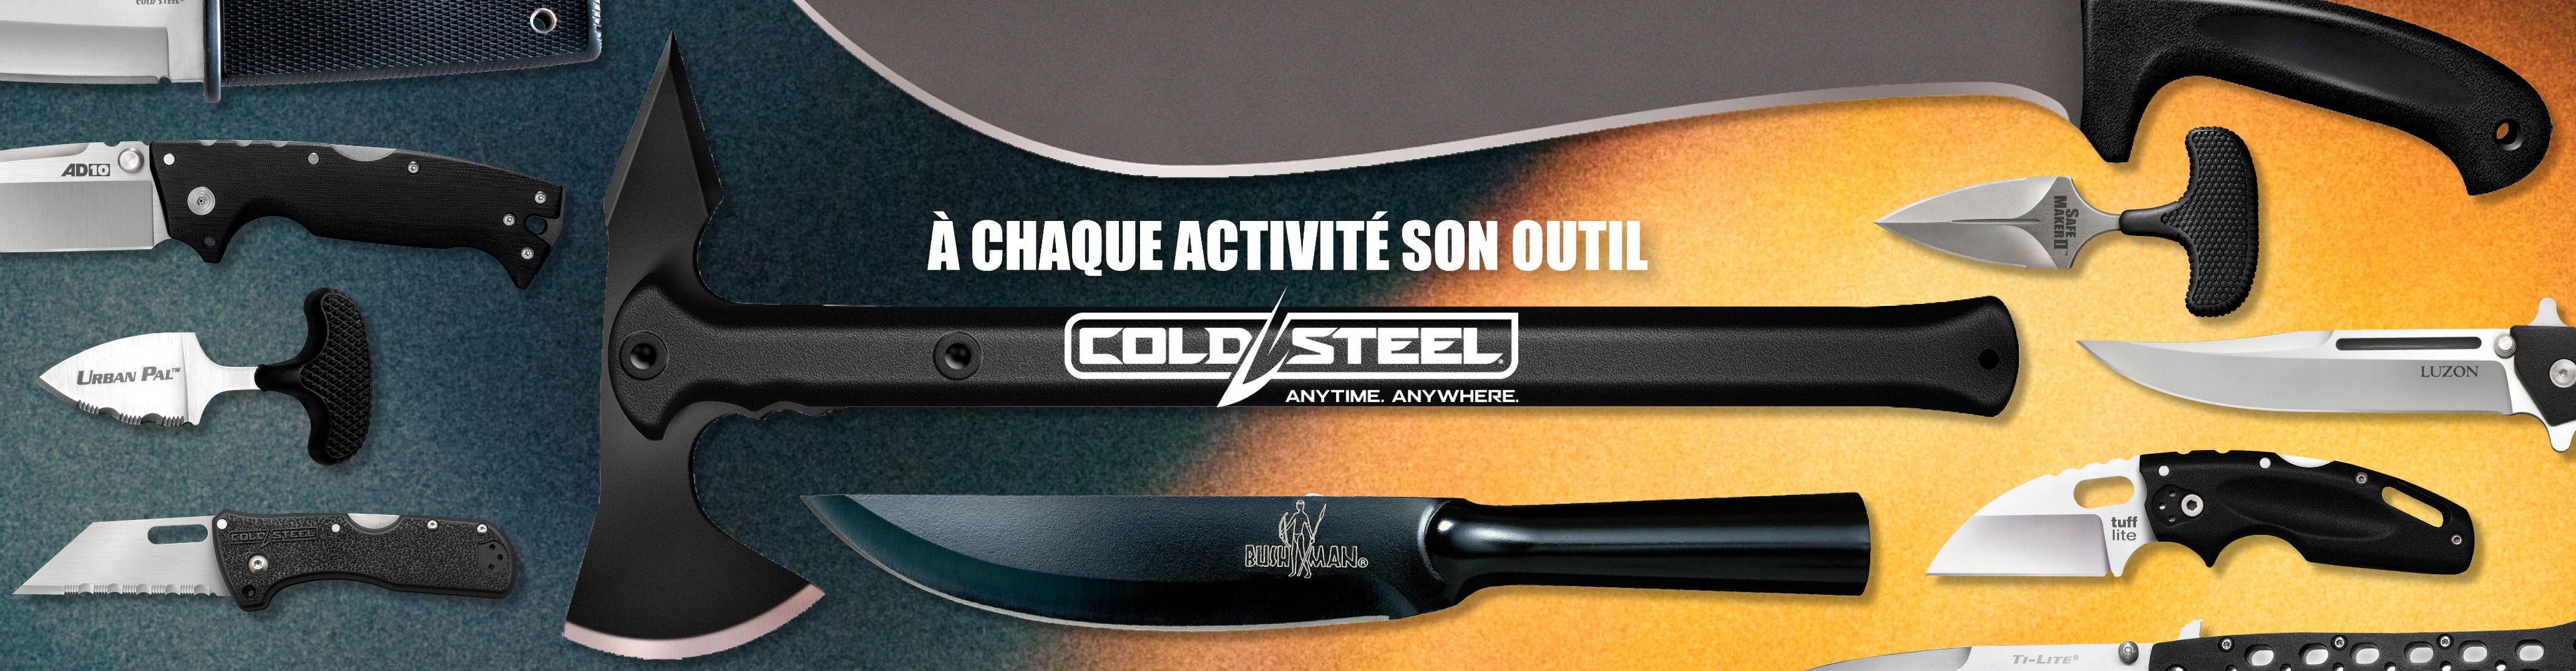 Bandeau Accueil Cold Steel